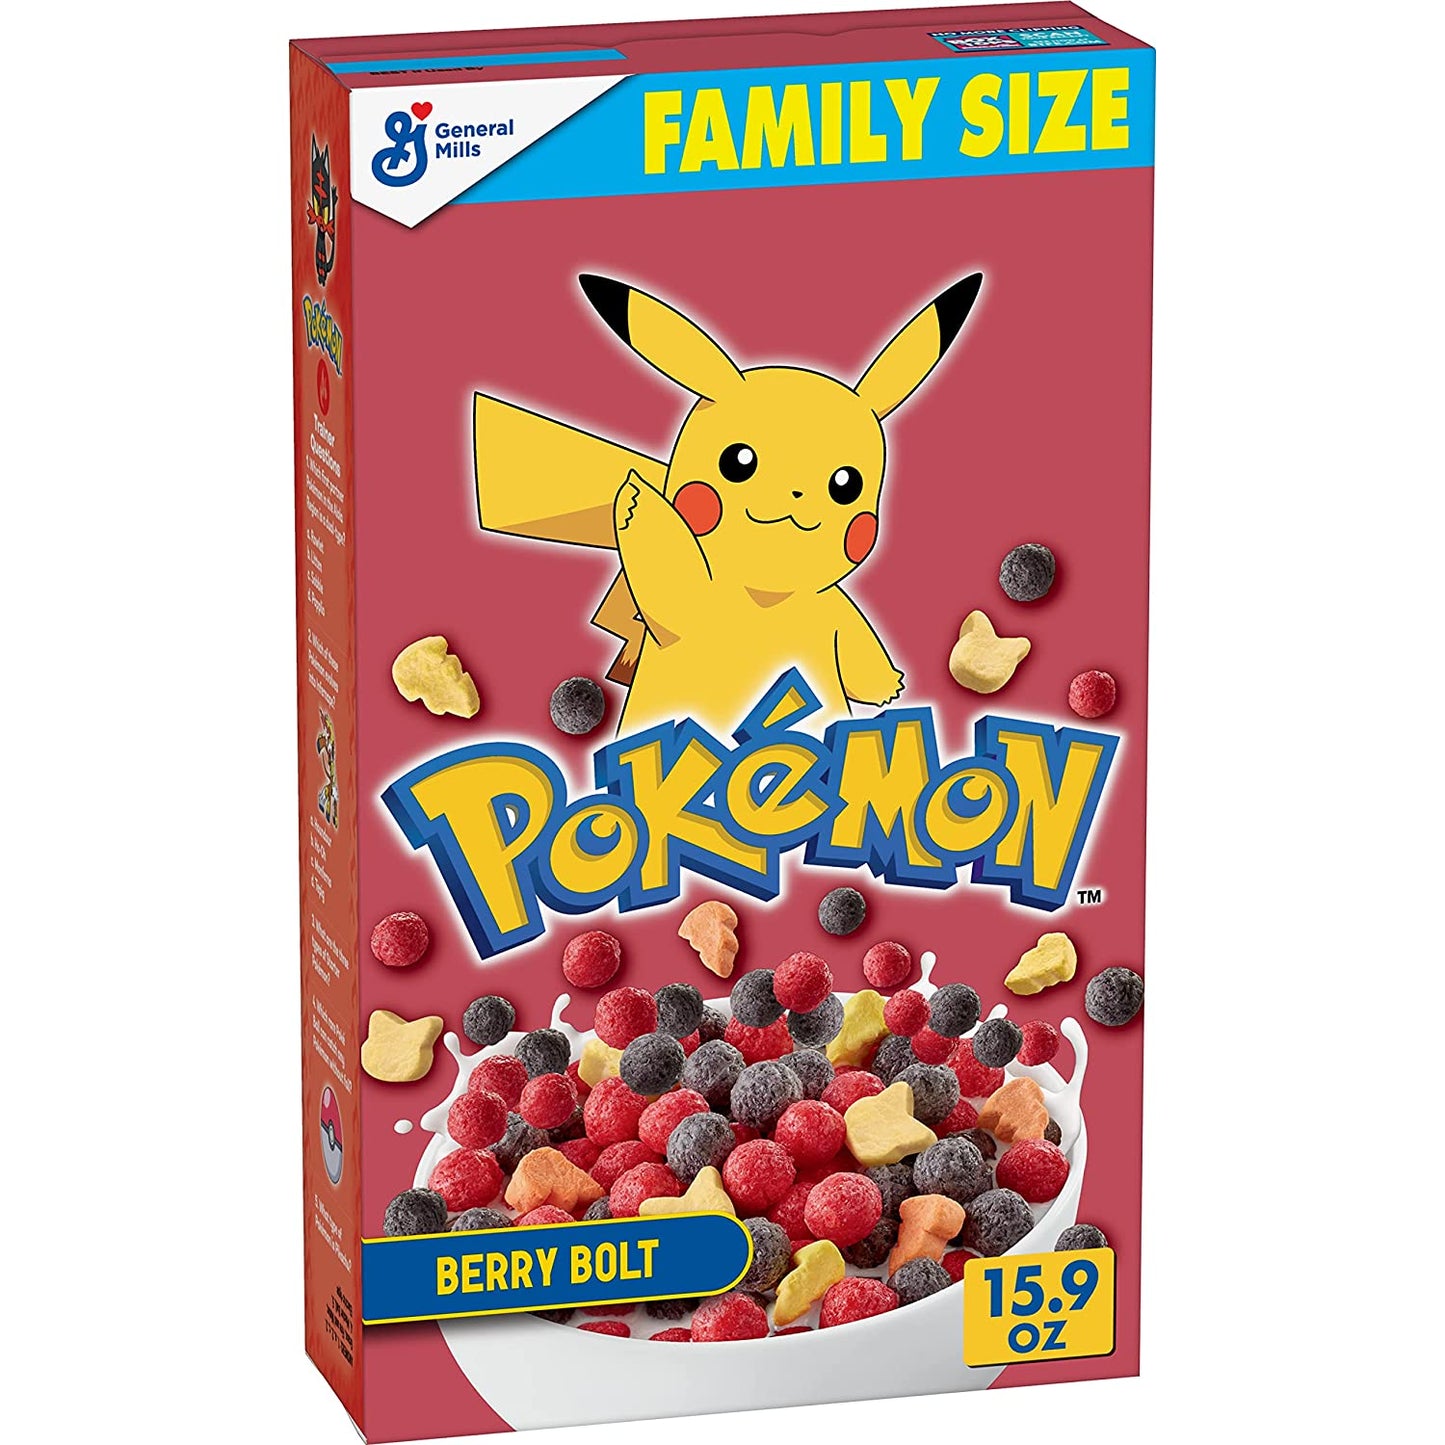 Pokémon Breakfast Cereal, Berry Bolt, 15.9 oz - Ultra Rare LIMITED EDITION